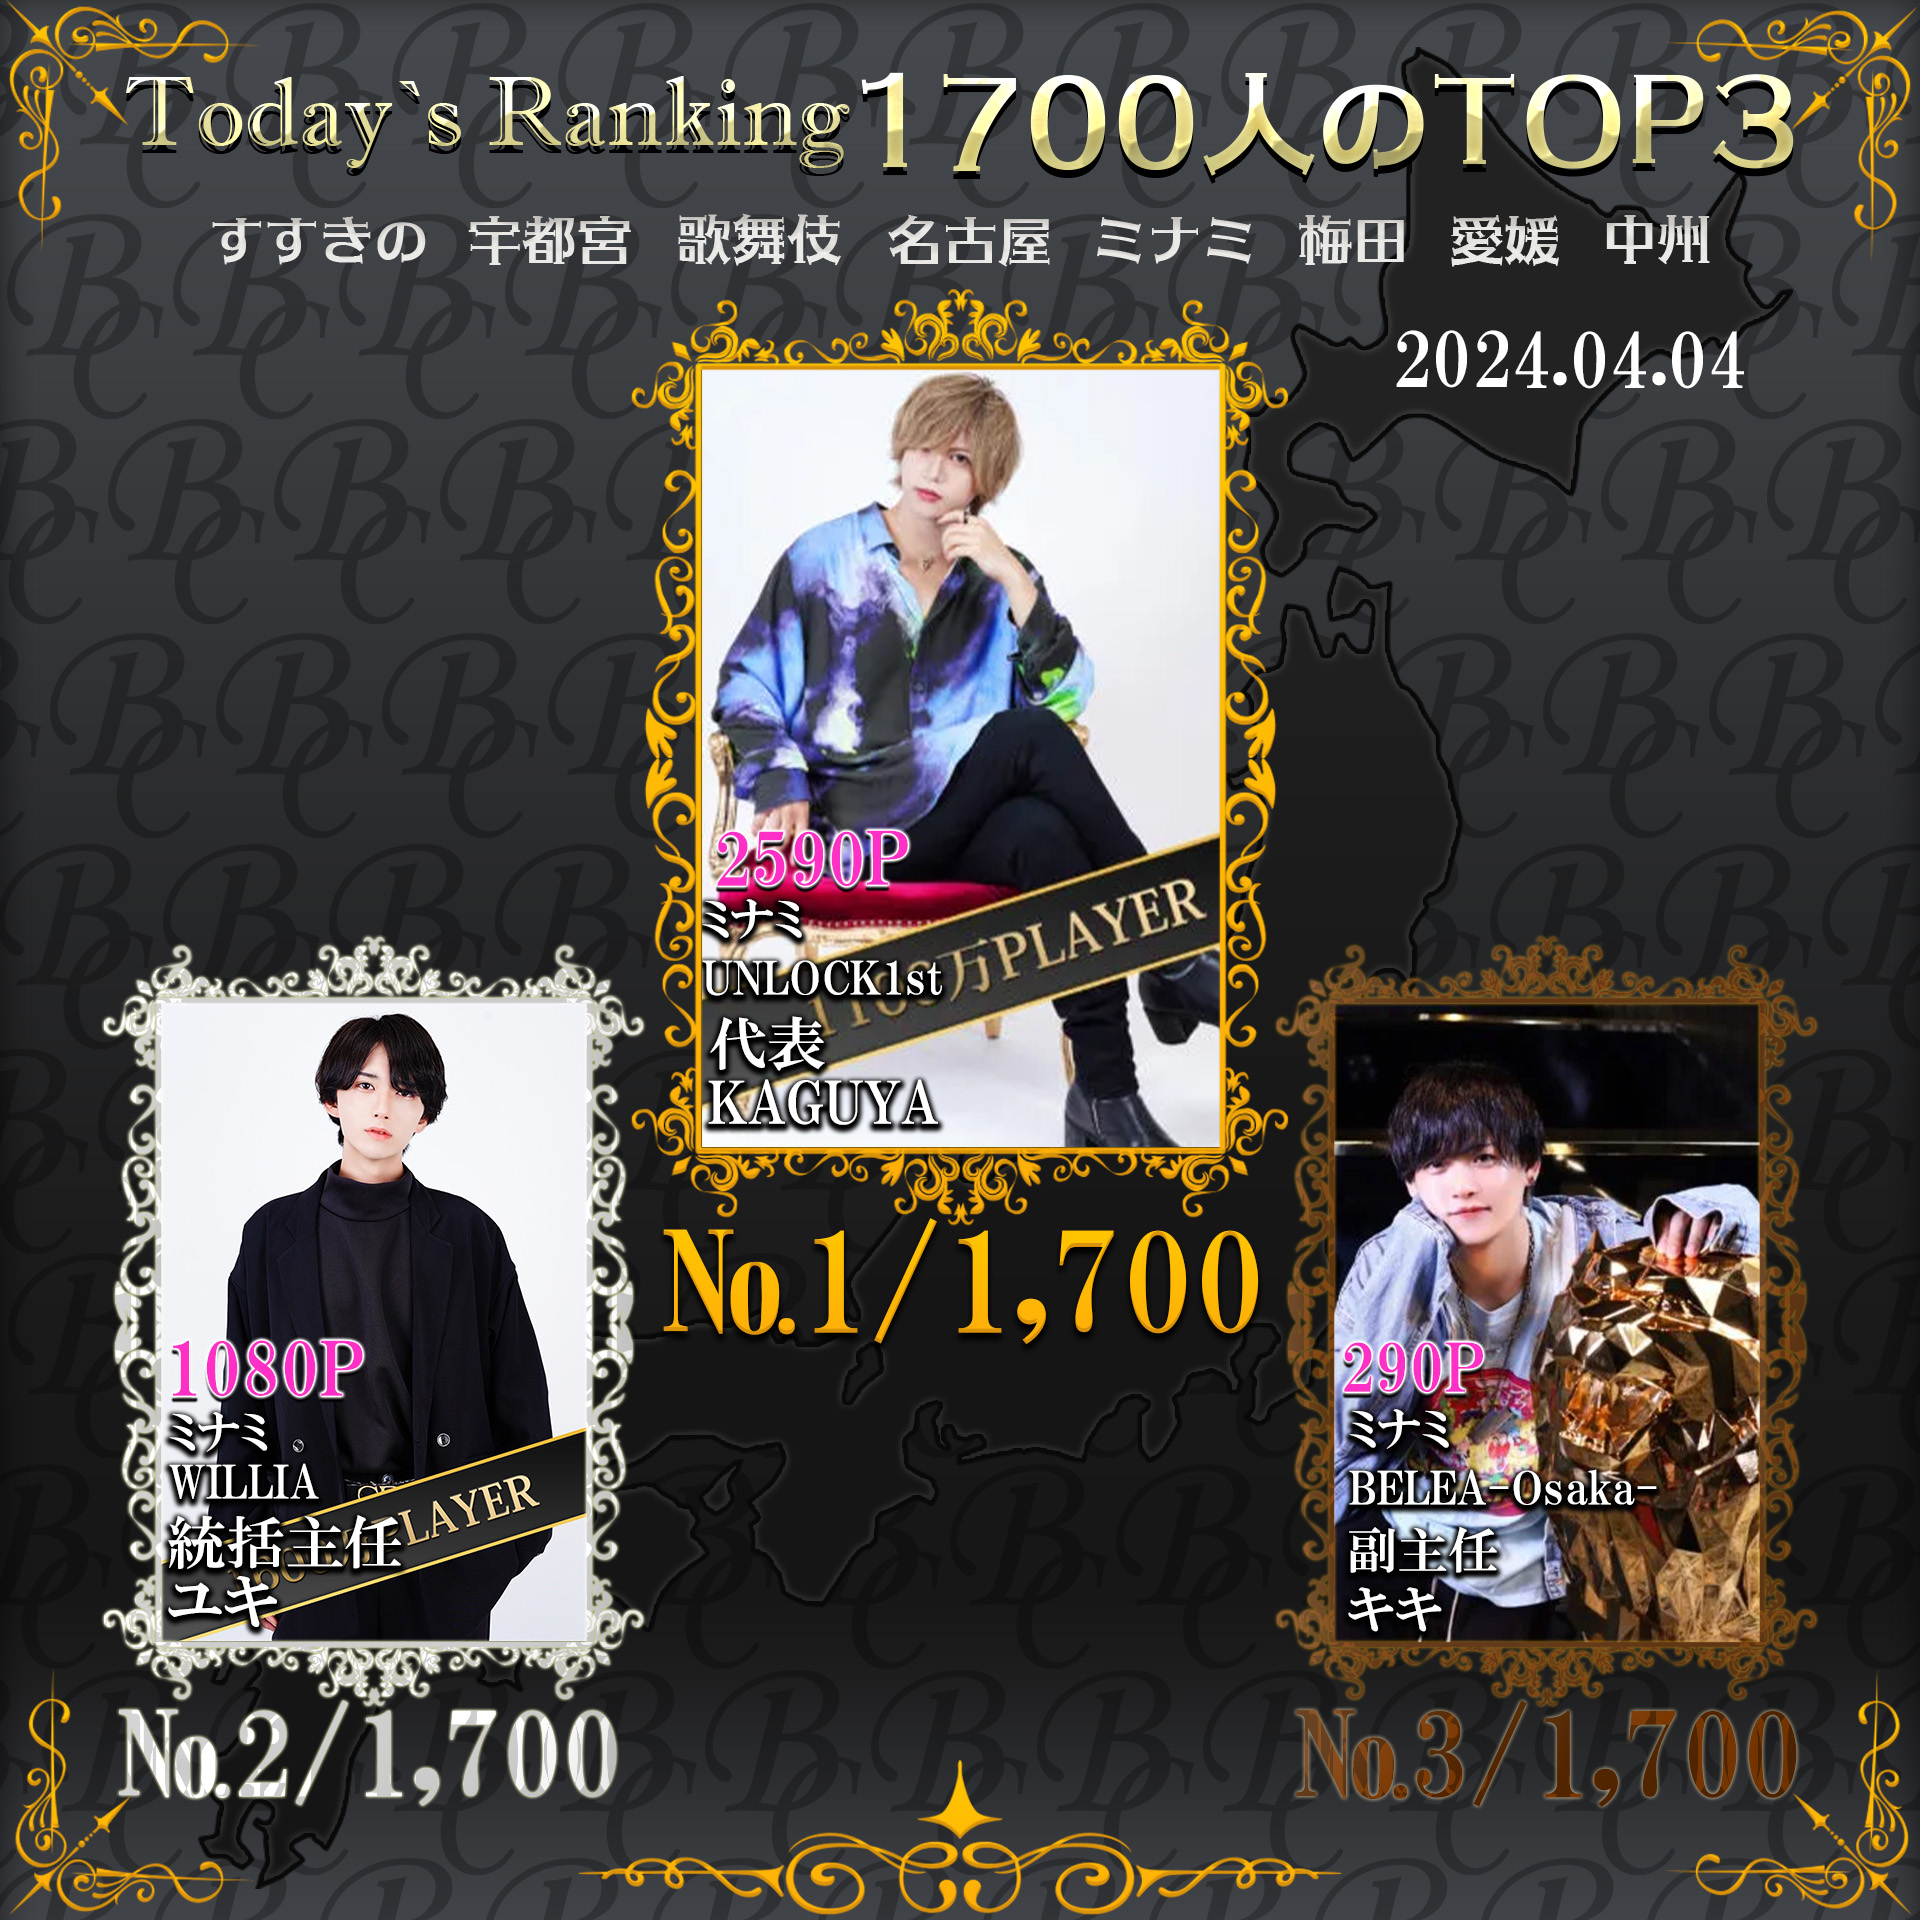 4/4 Today’s Ranking